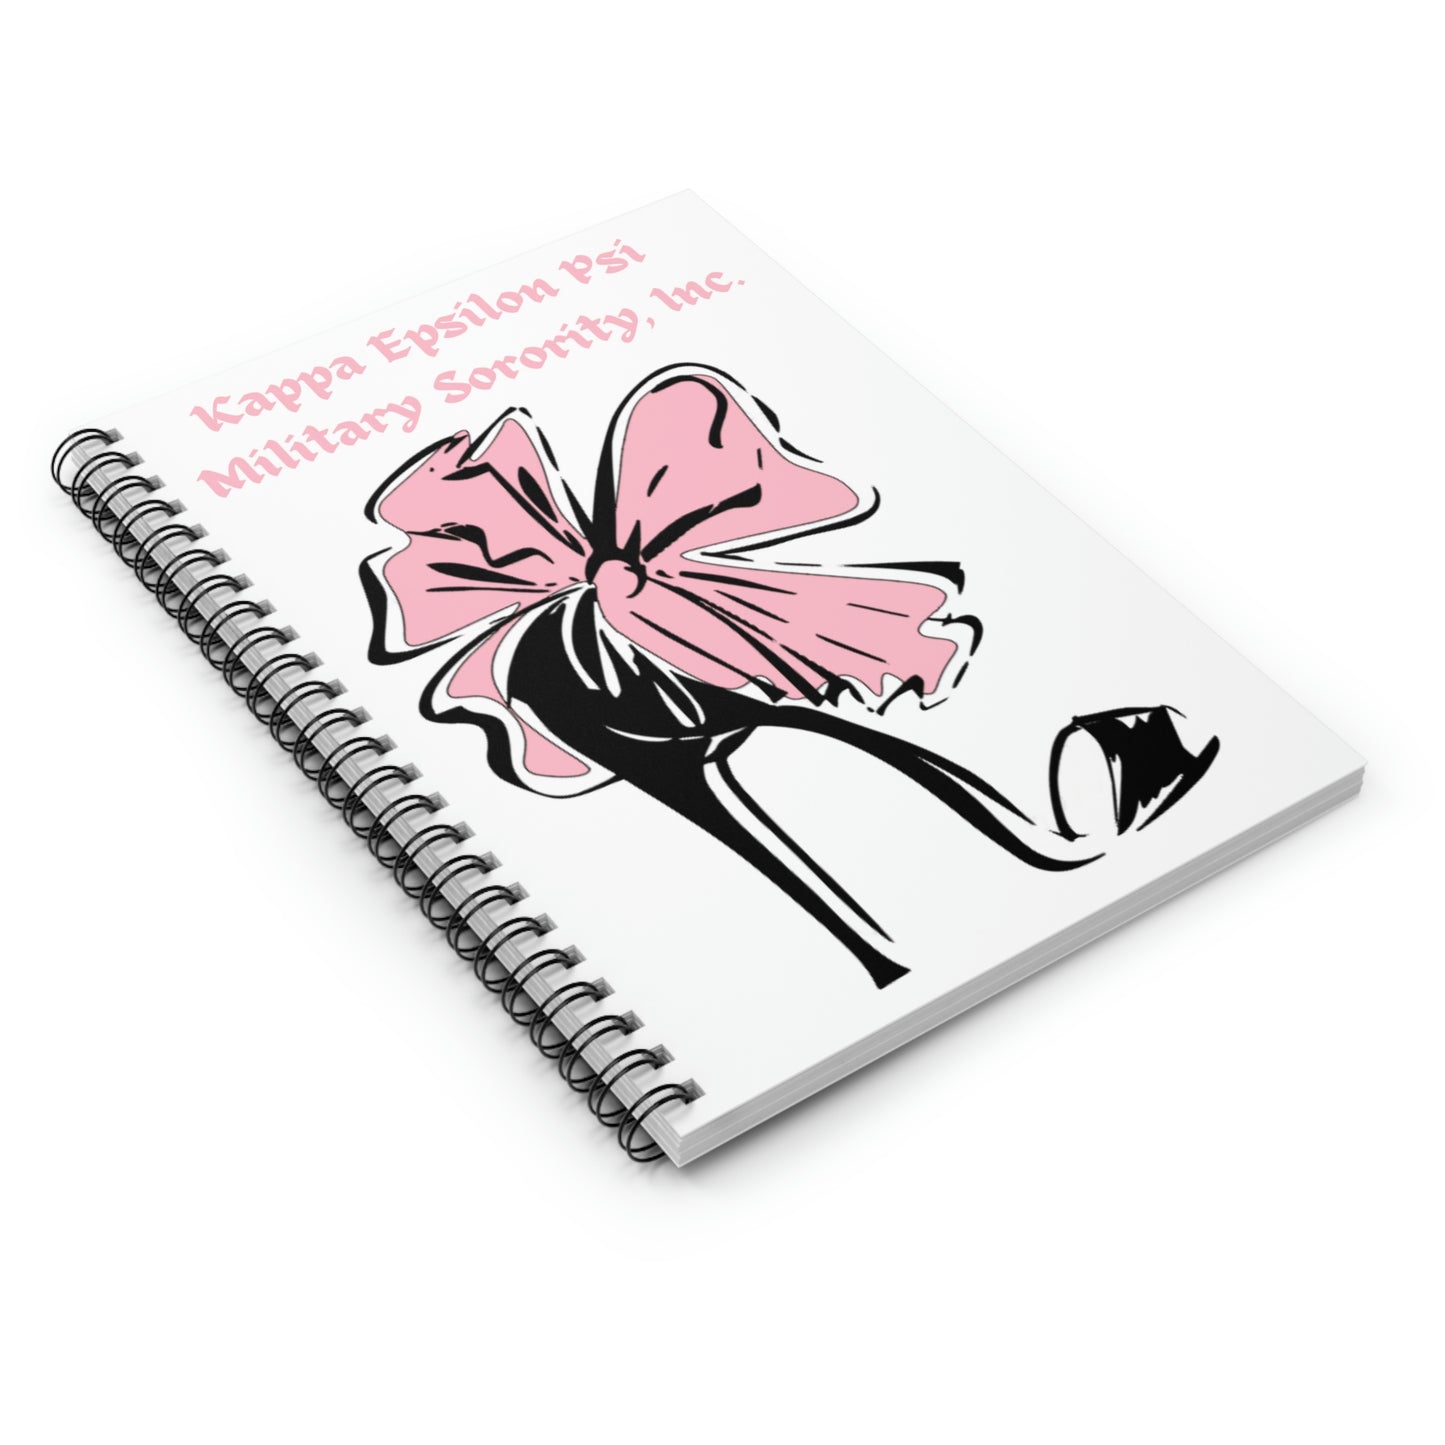 Kappa Epsilon Psi (ΚΕΨ) (Pink) Spiral Notebook - Ruled Line